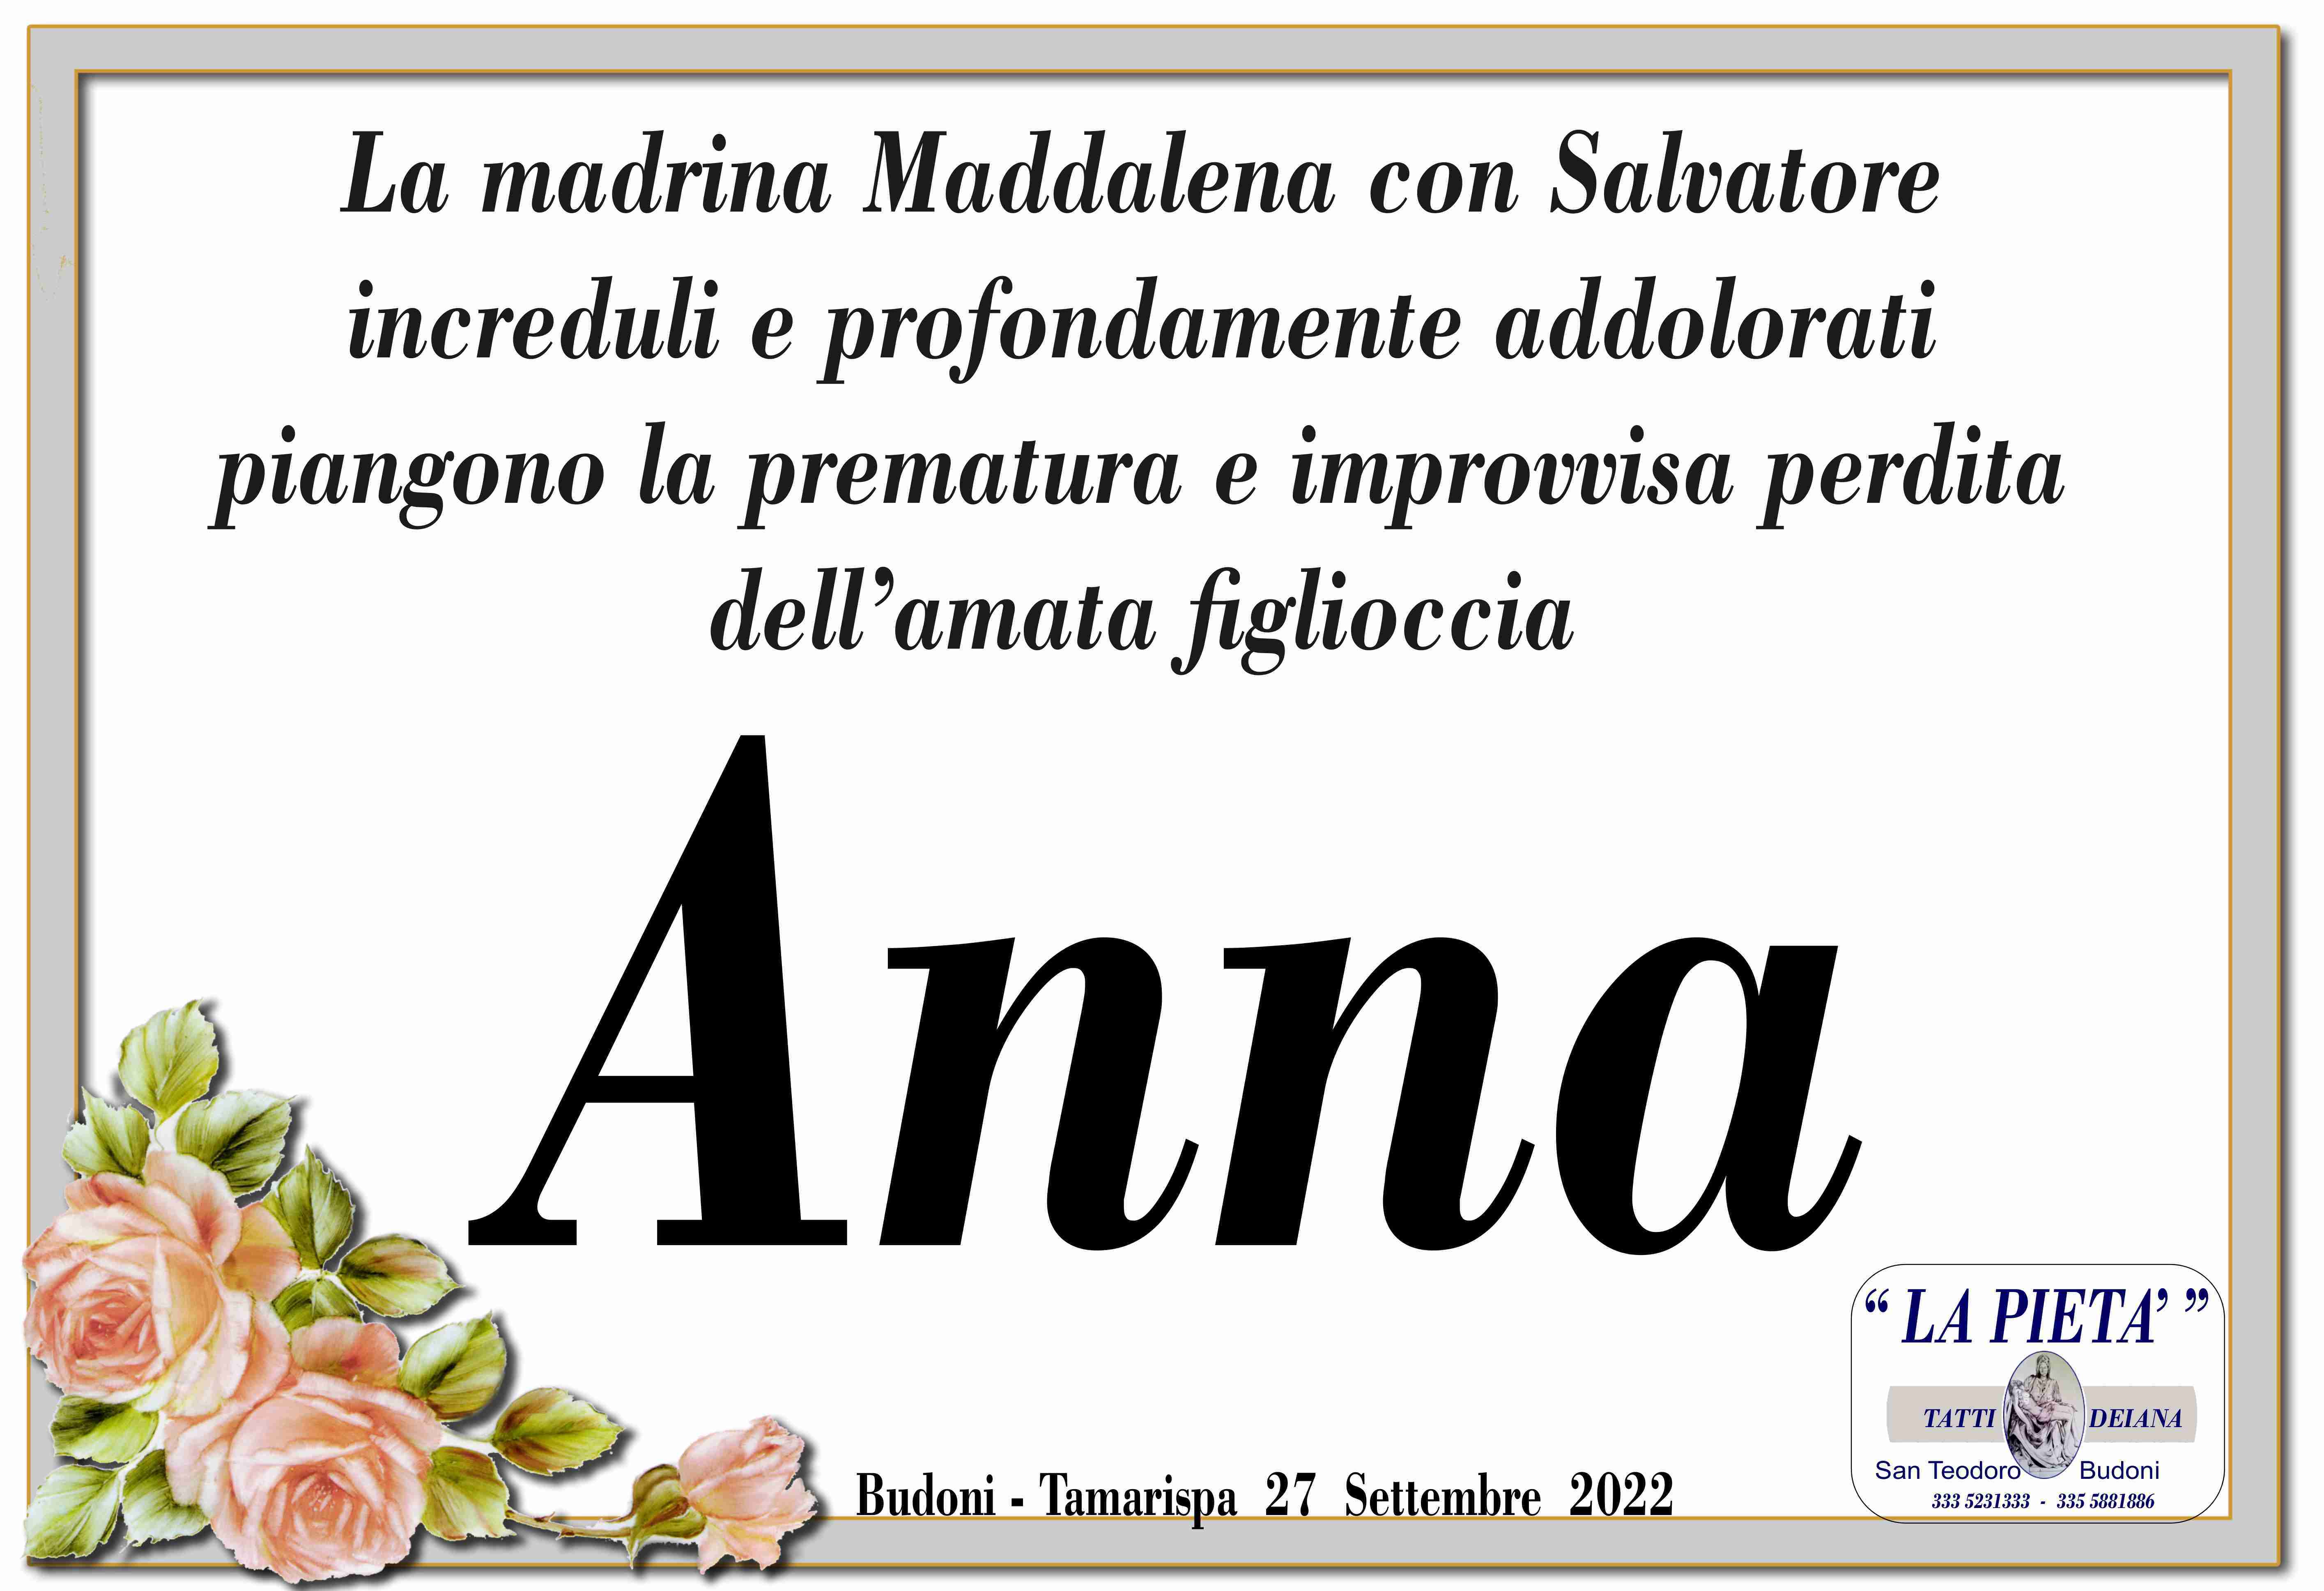 Anna Maria Piredda